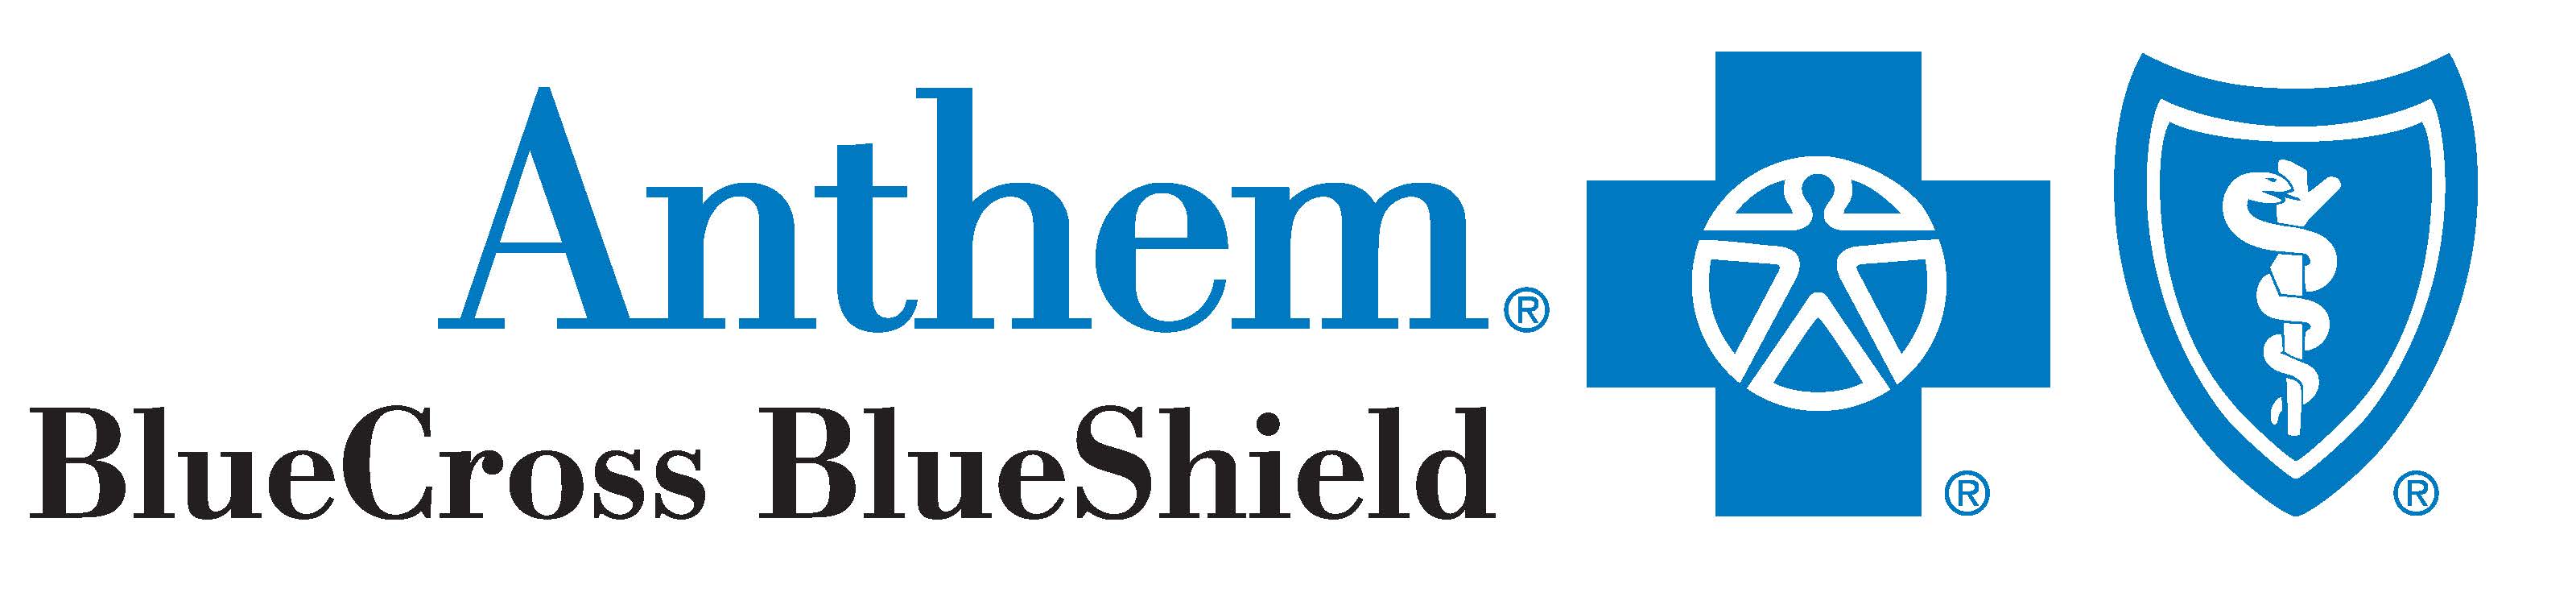 Anthem Blue Cross Blue Shield - Roger Smith Insurance Agency